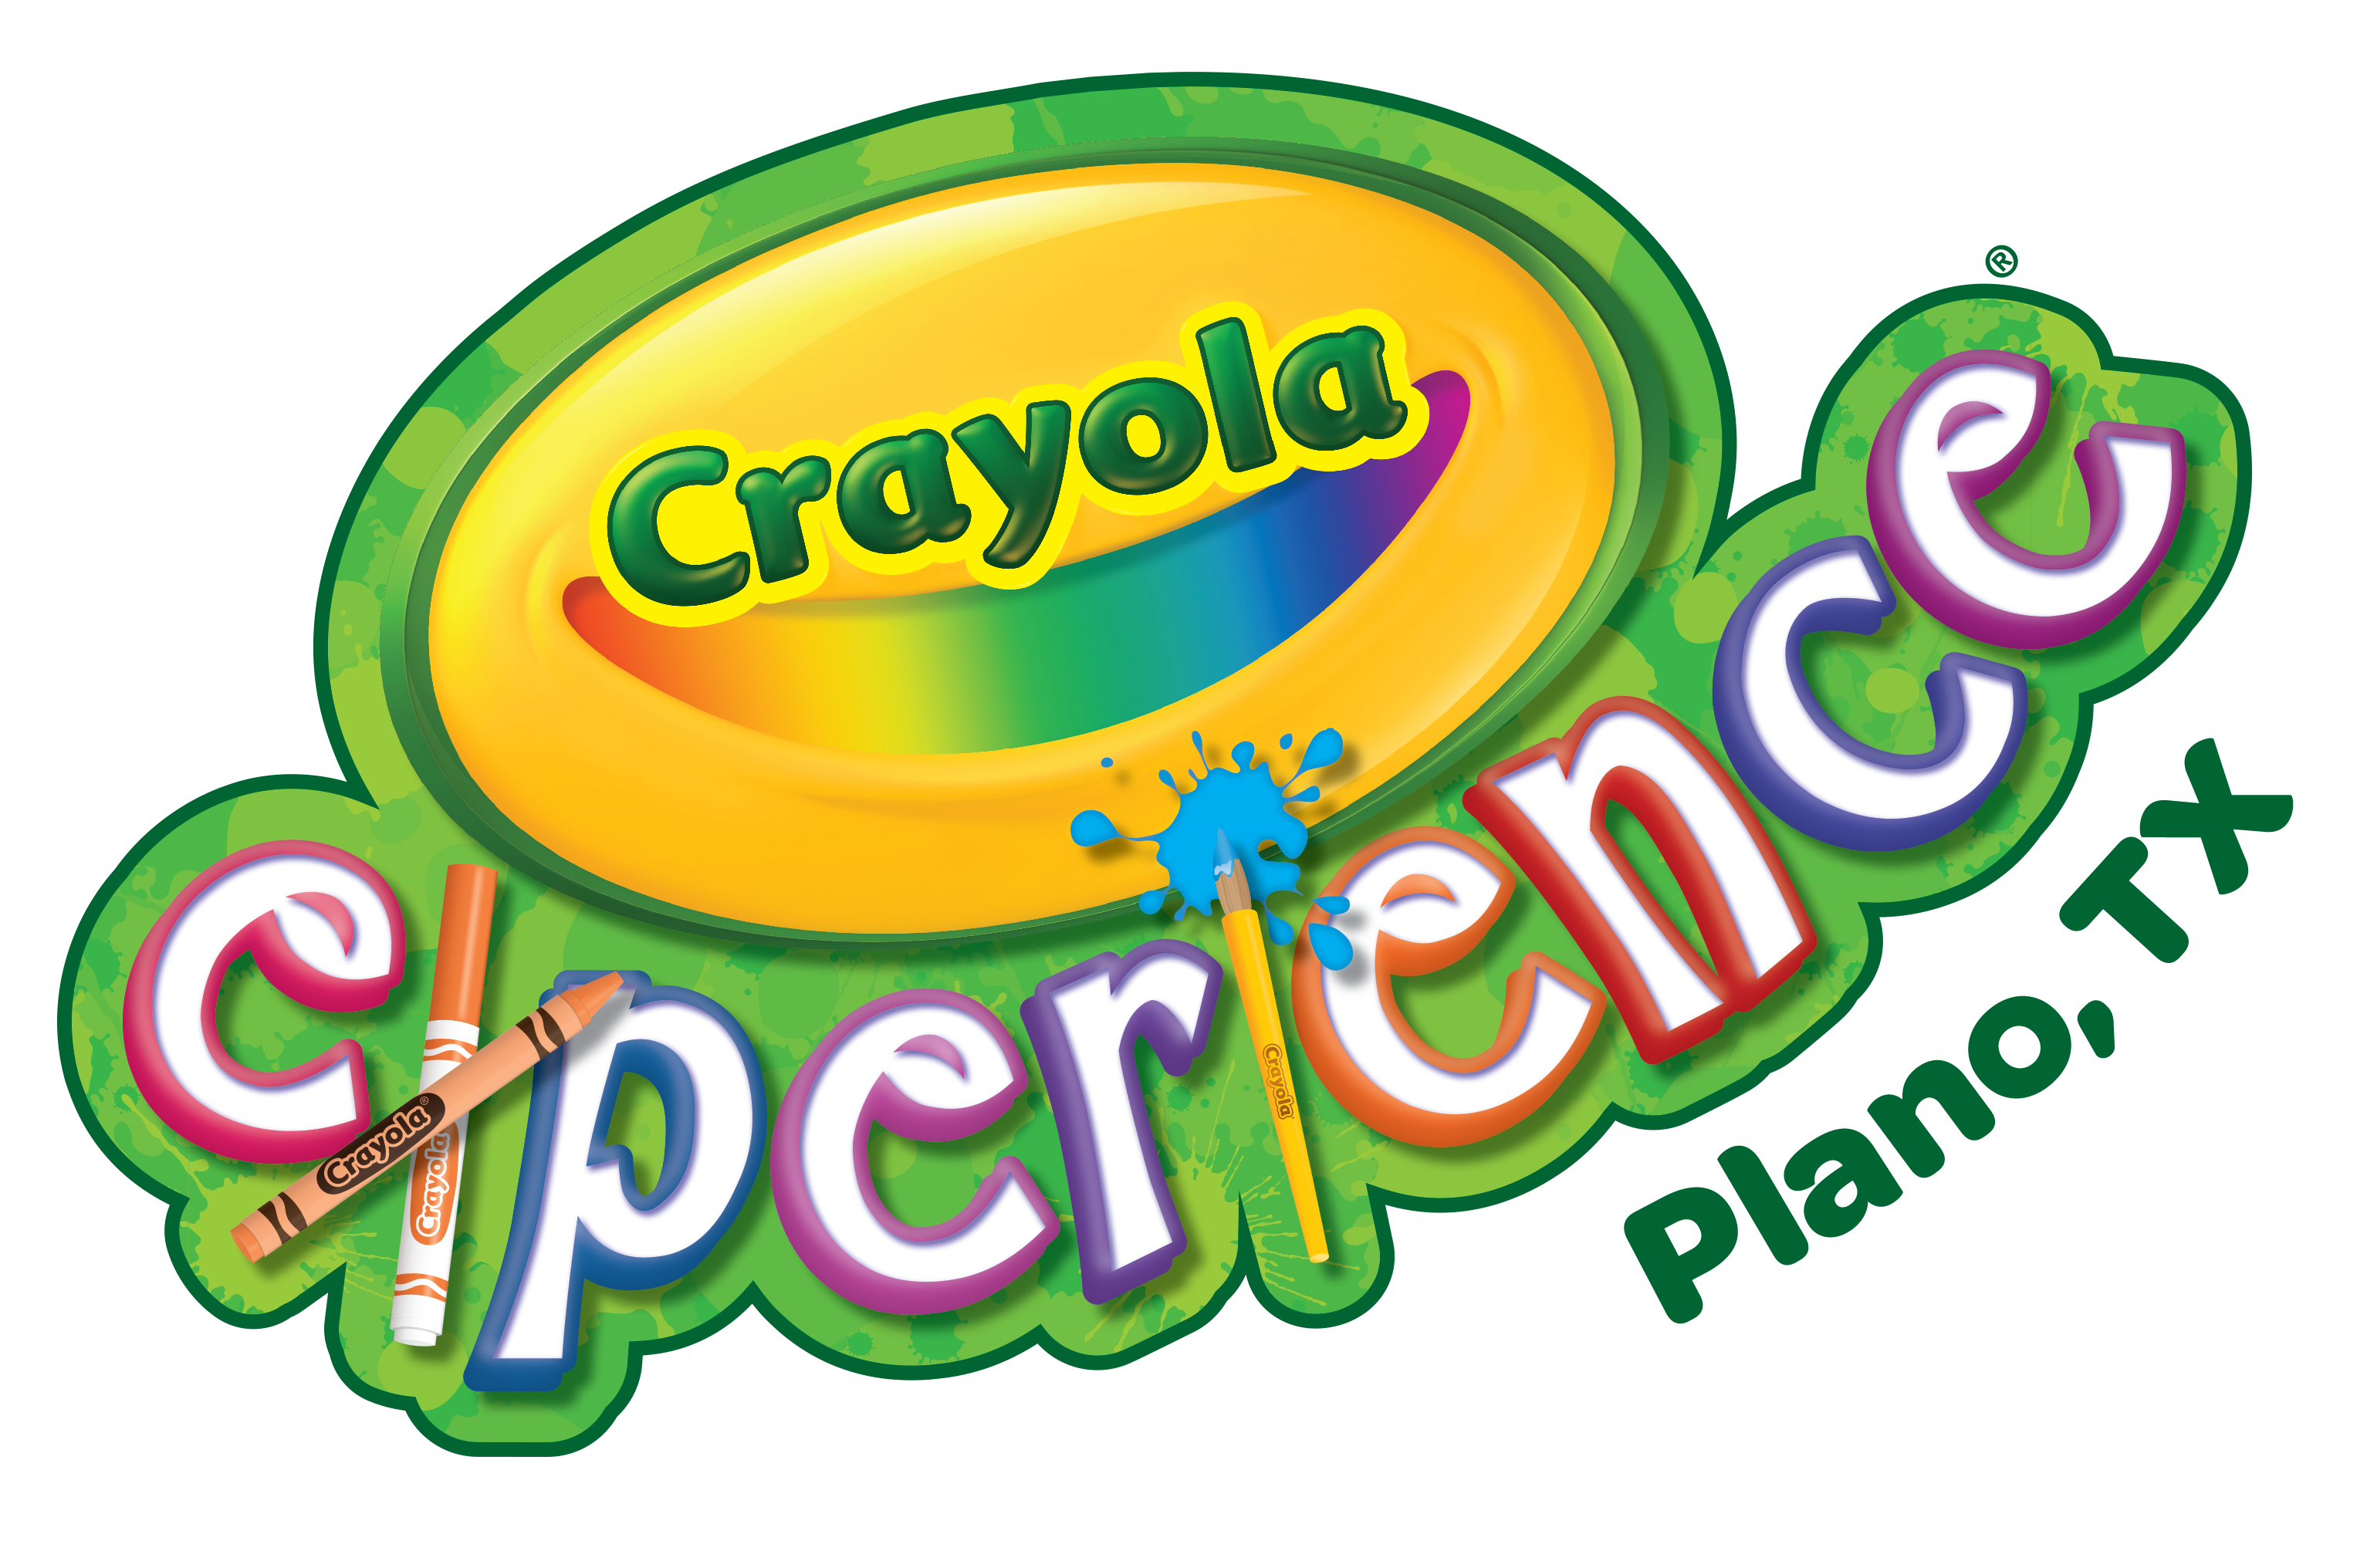 Crayola Experience Plano TX